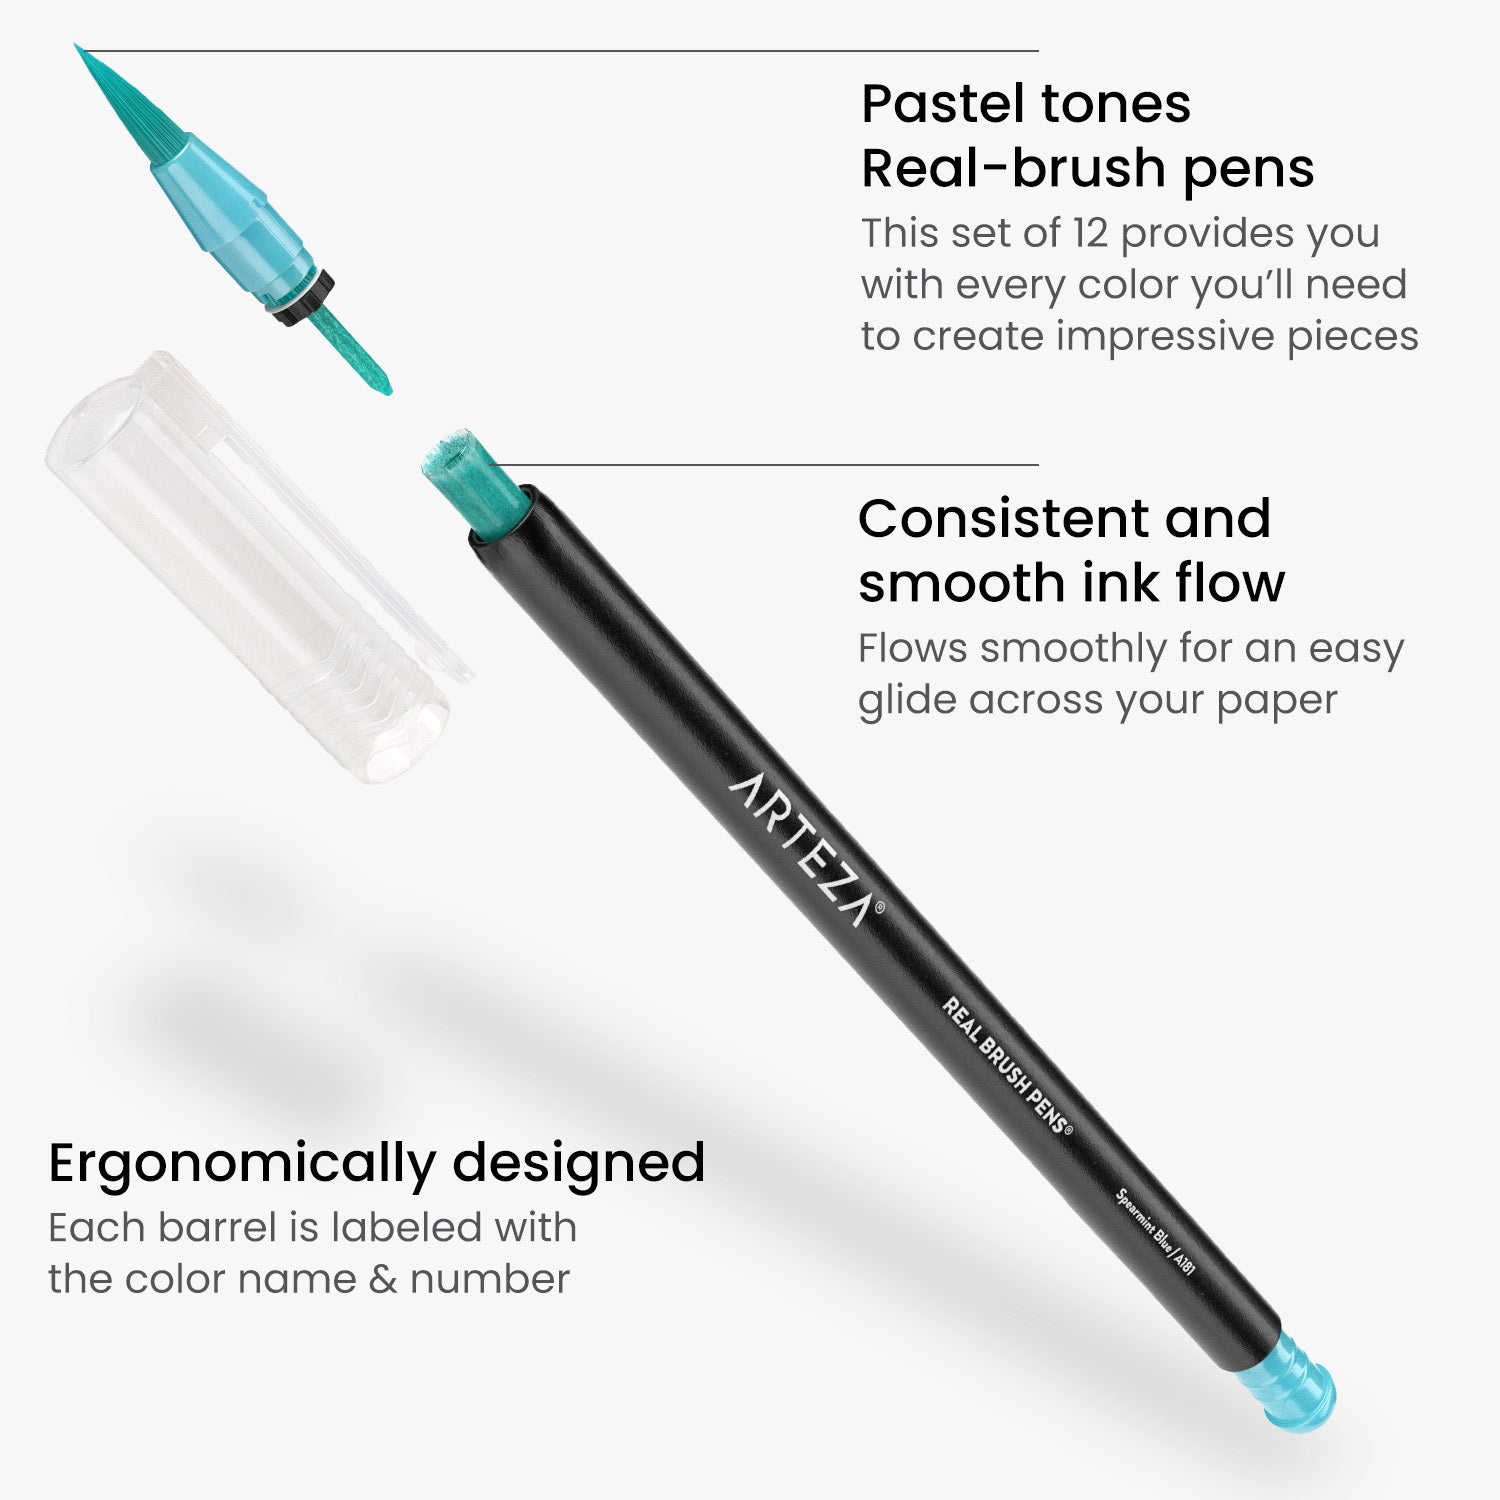 DoCrafts - Artiste Dual Tip Brush Markers (12 Pack) - Pastel